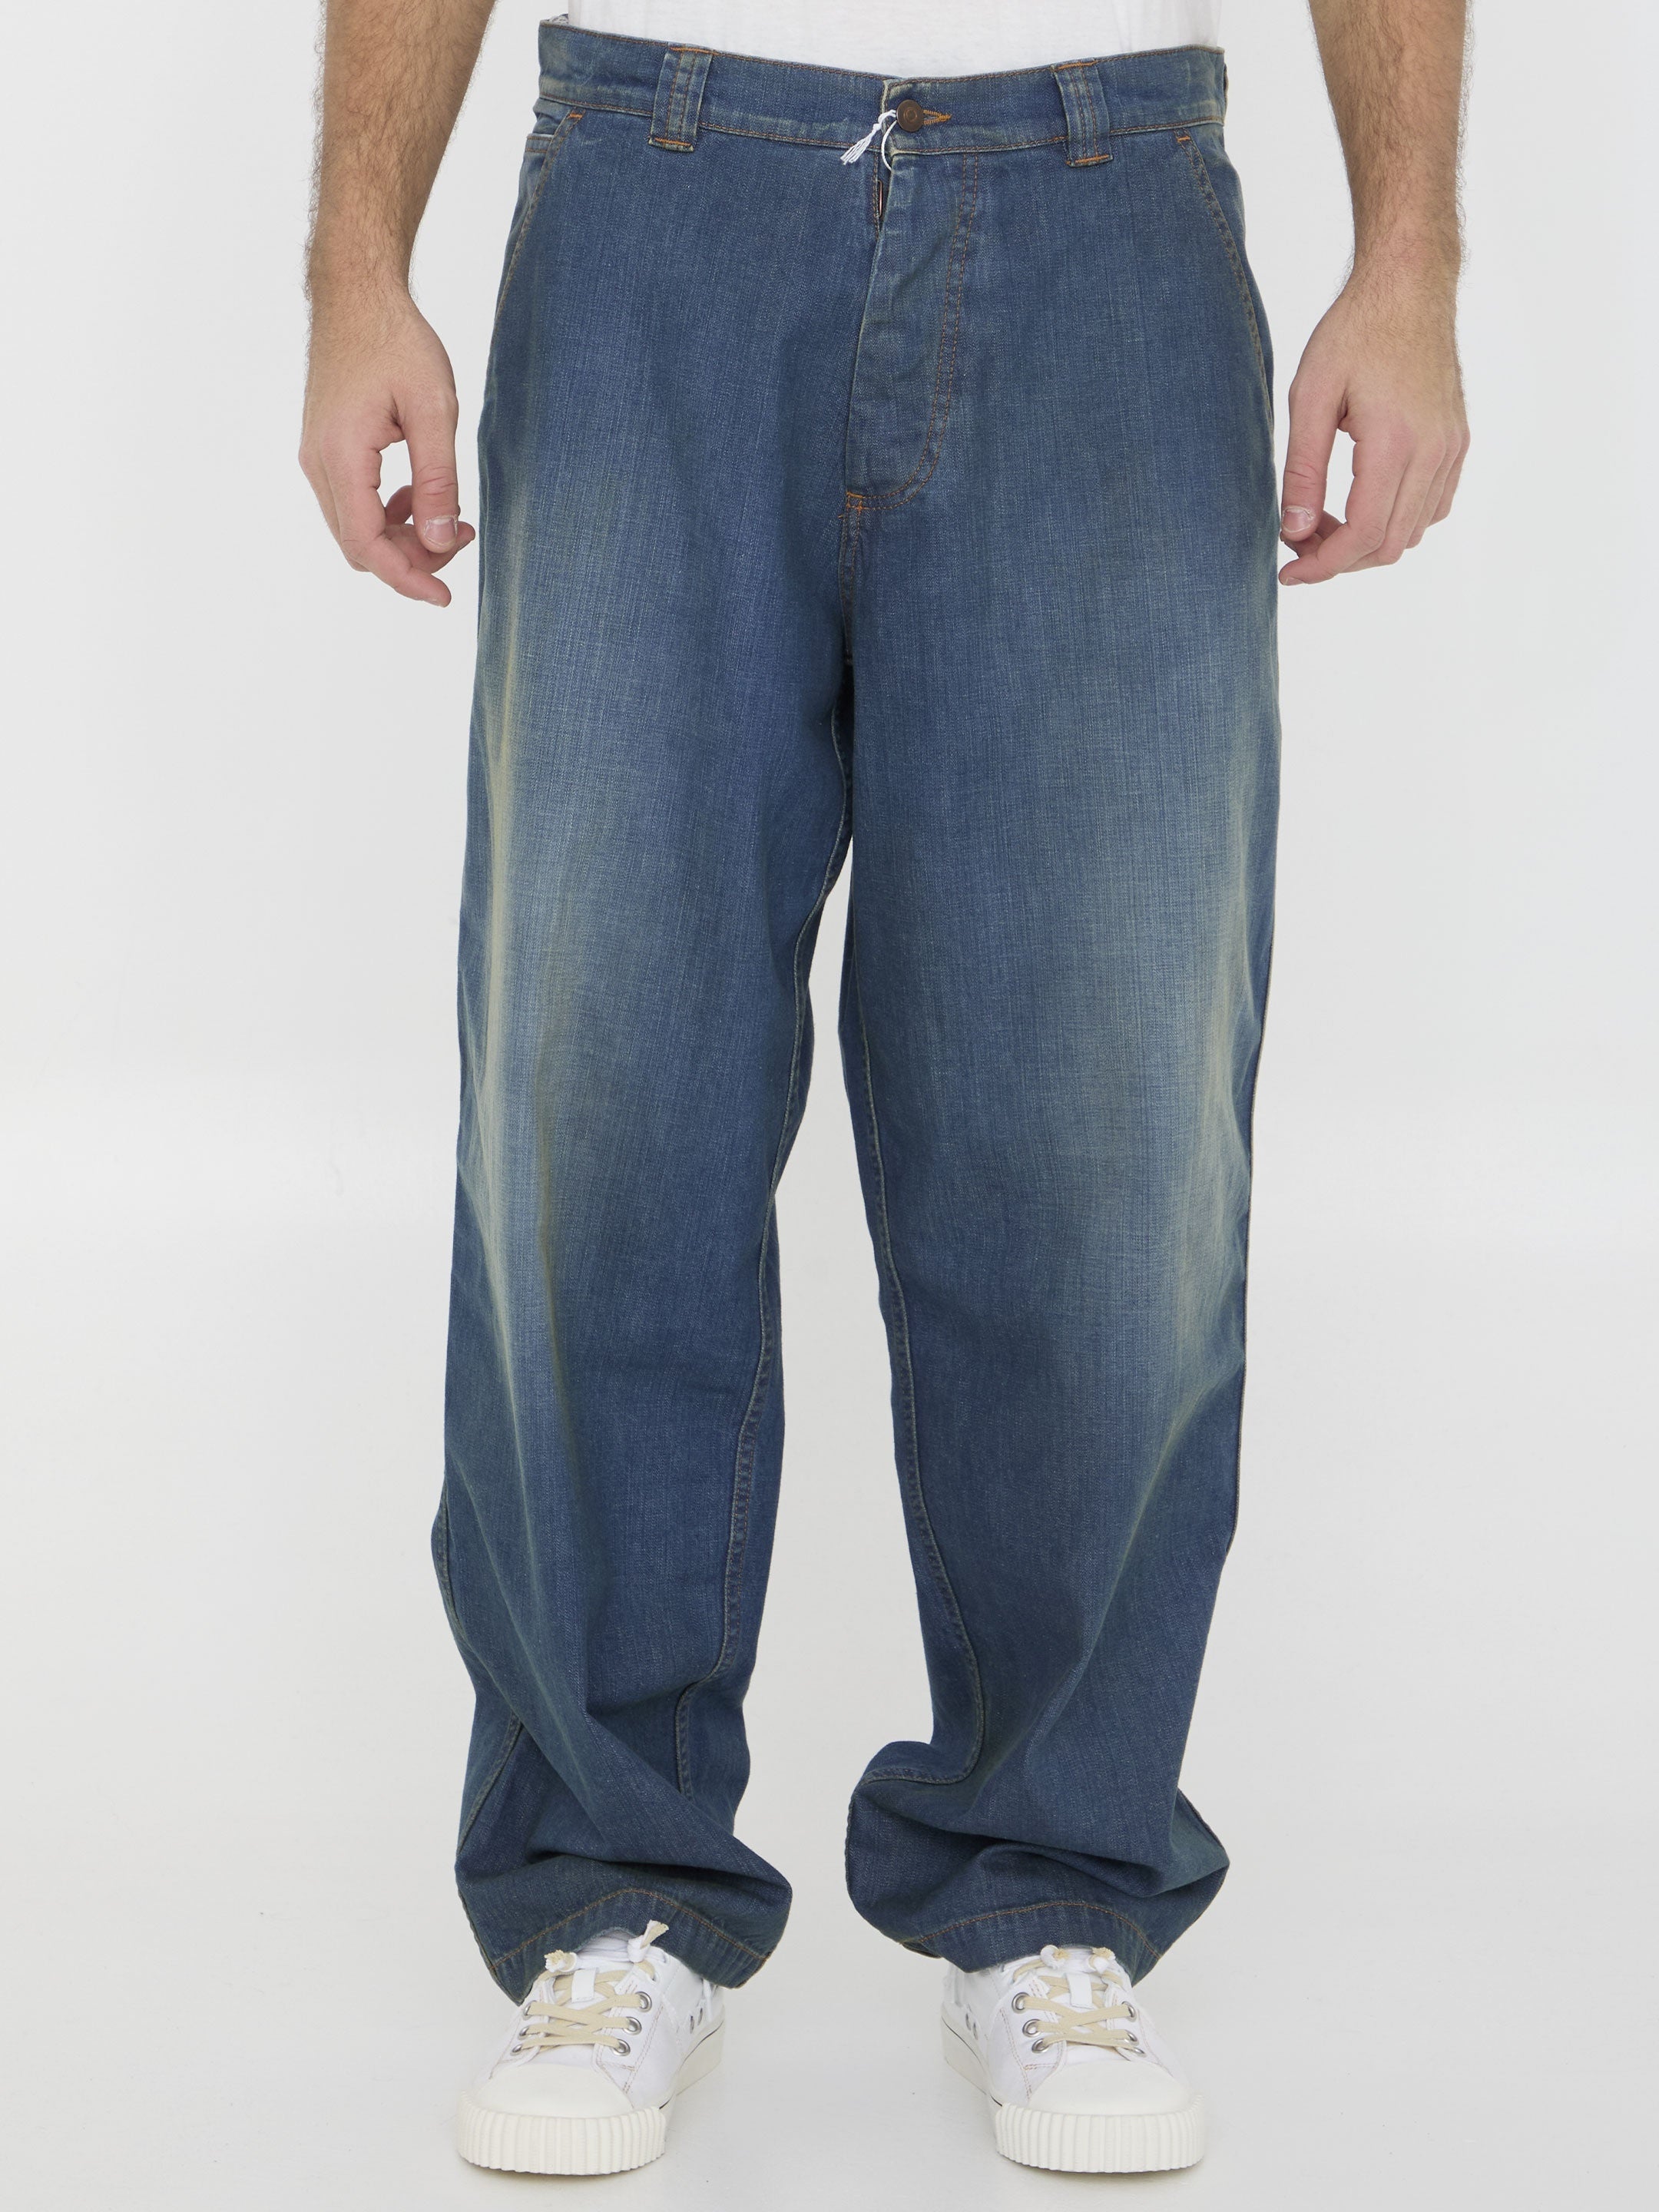 MAISON-MARGIELA-OUTLET-SALE-Americana-wash-jeans-Jeans-30-BLUE-ARCHIVE-COLLECTION.jpg